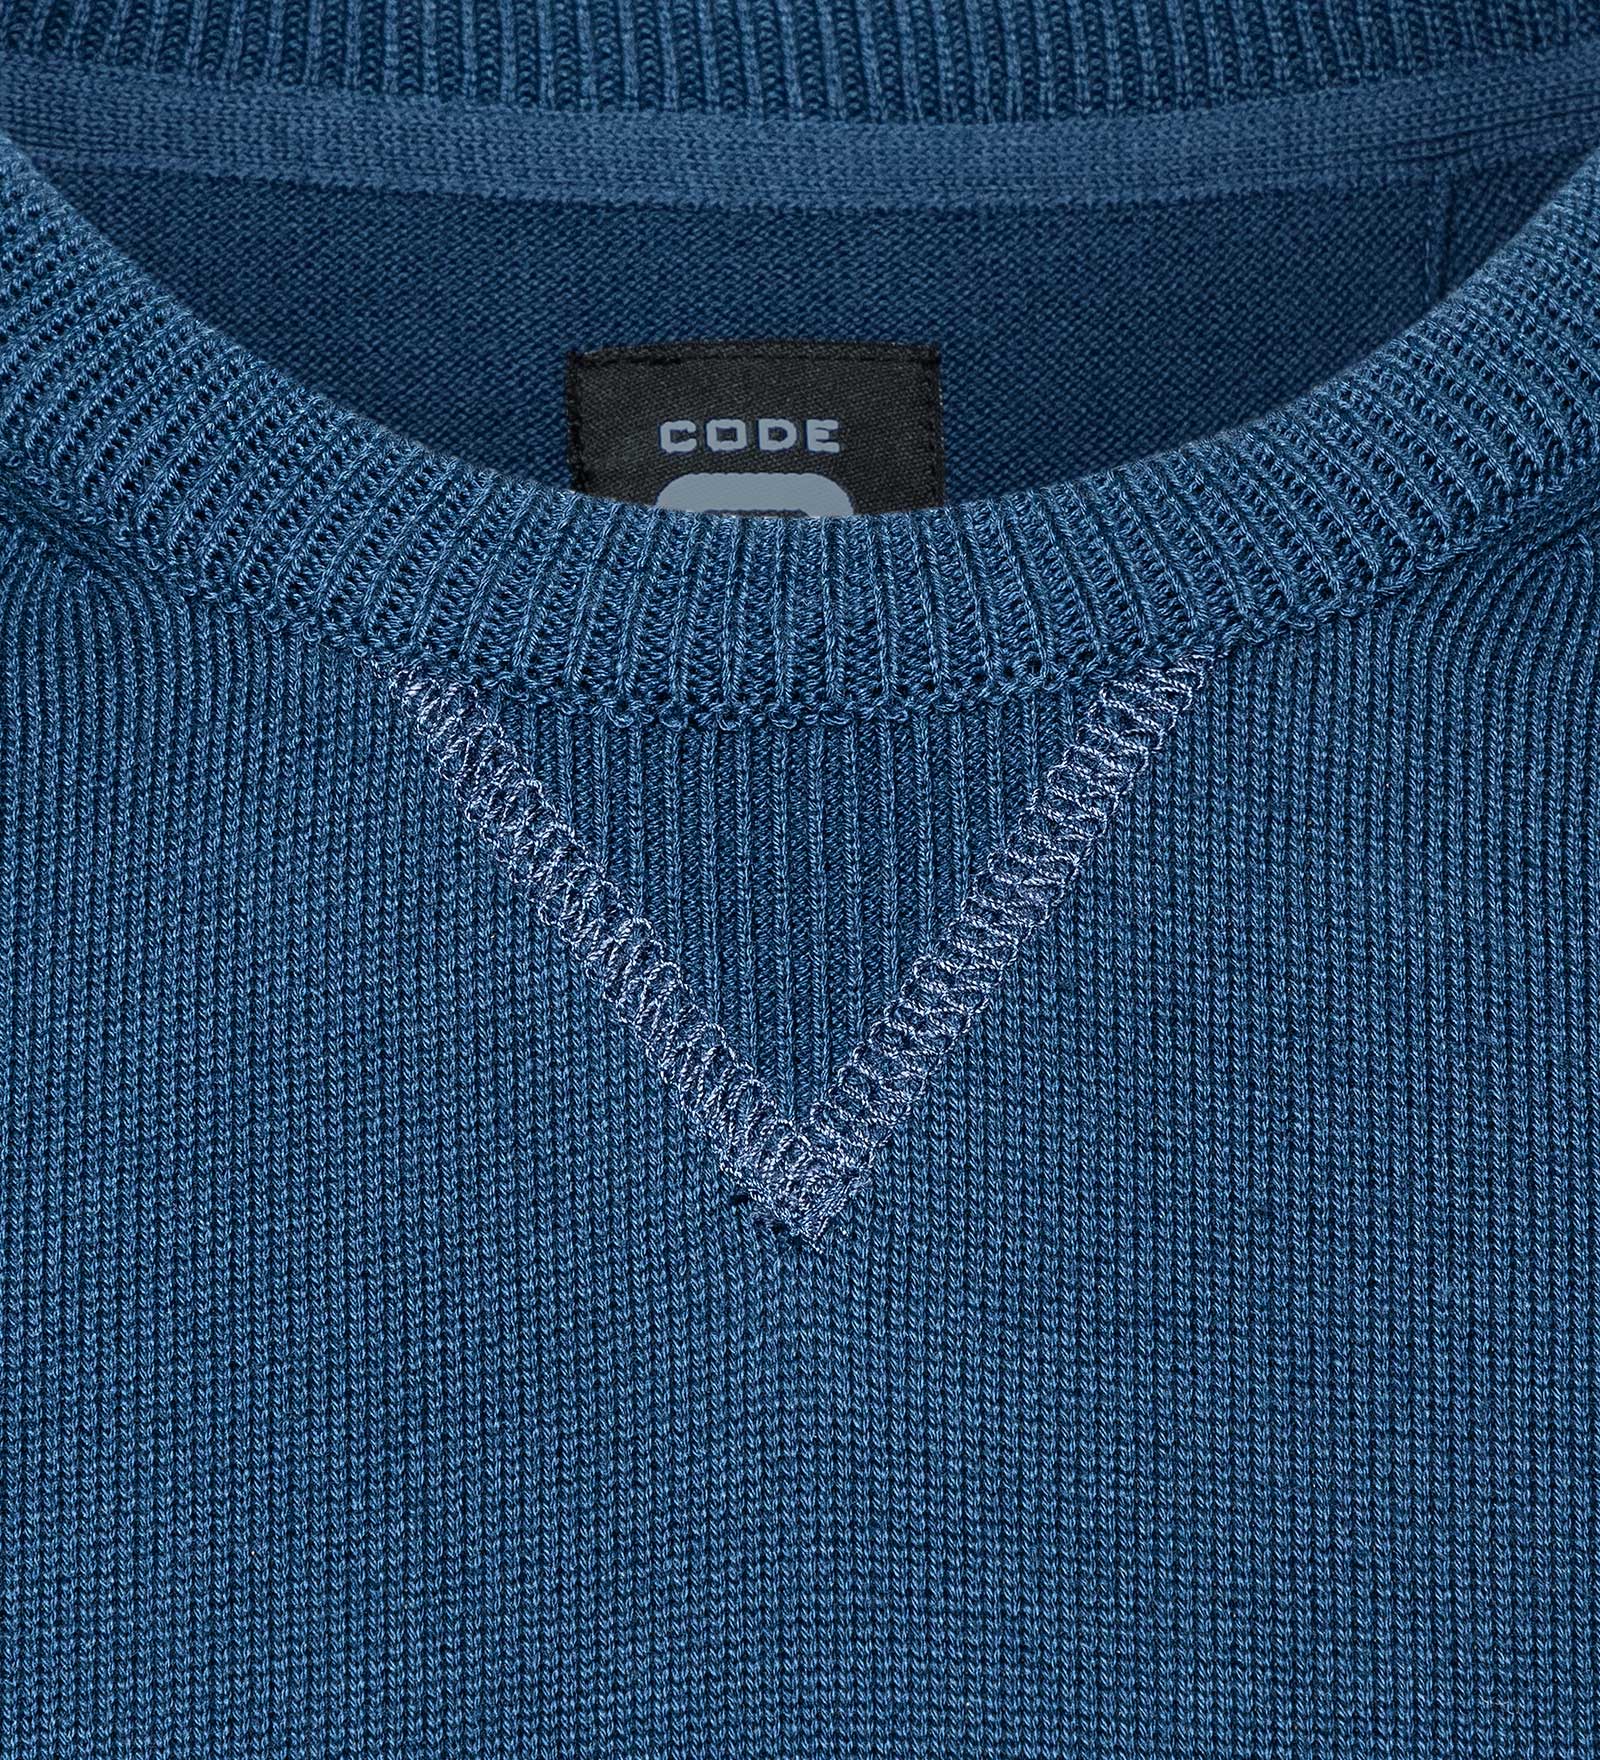 Crewneck Sweater Navy Blue for Men 